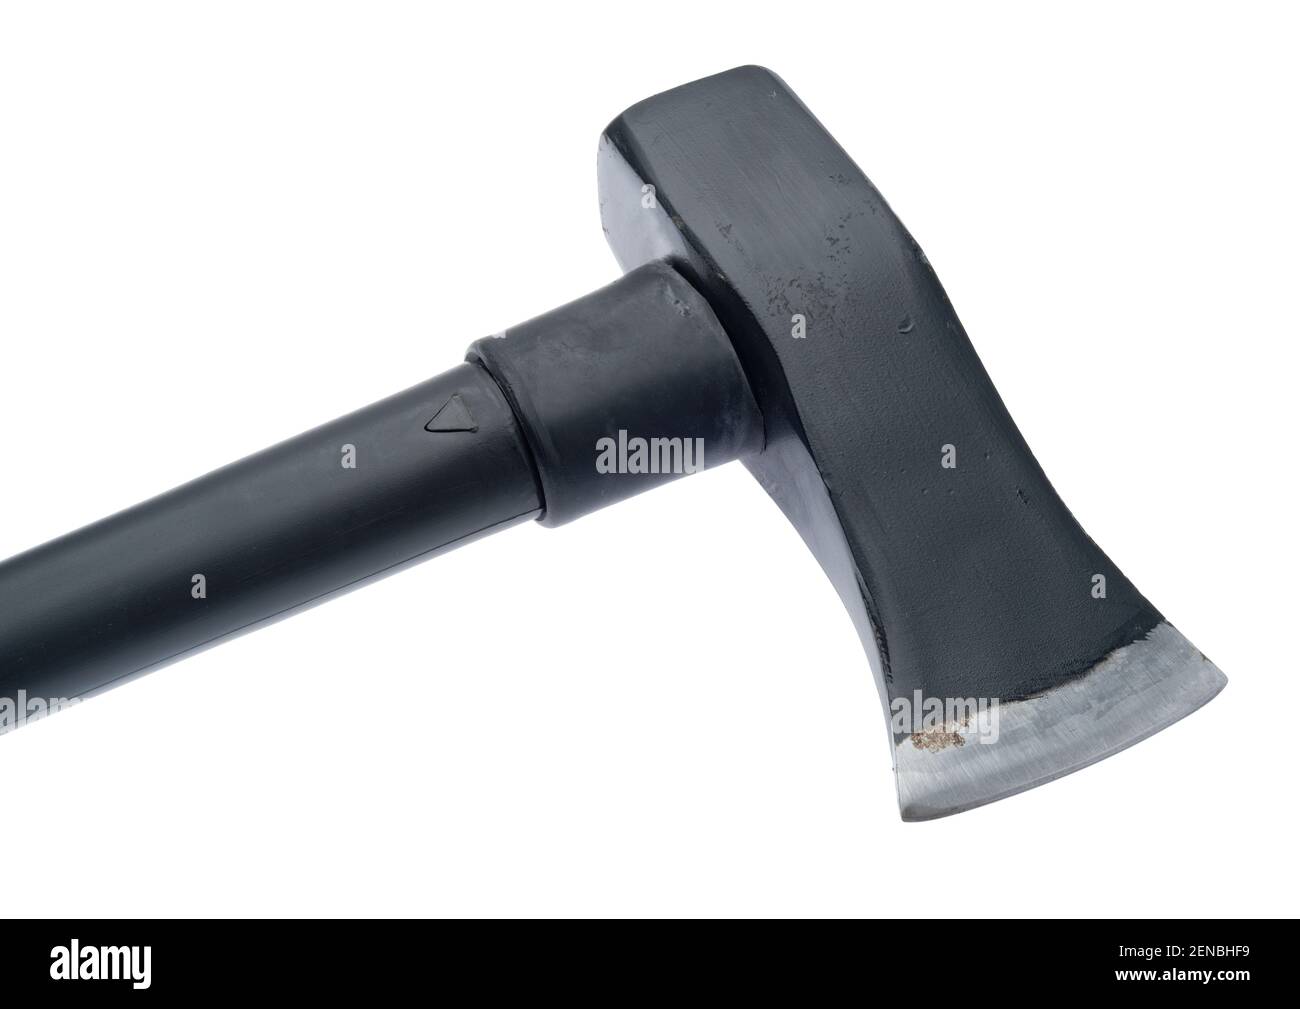 Axe Hammer with long handle. Heavy duty 6 lbs weight axe-hammer. Stock Photo